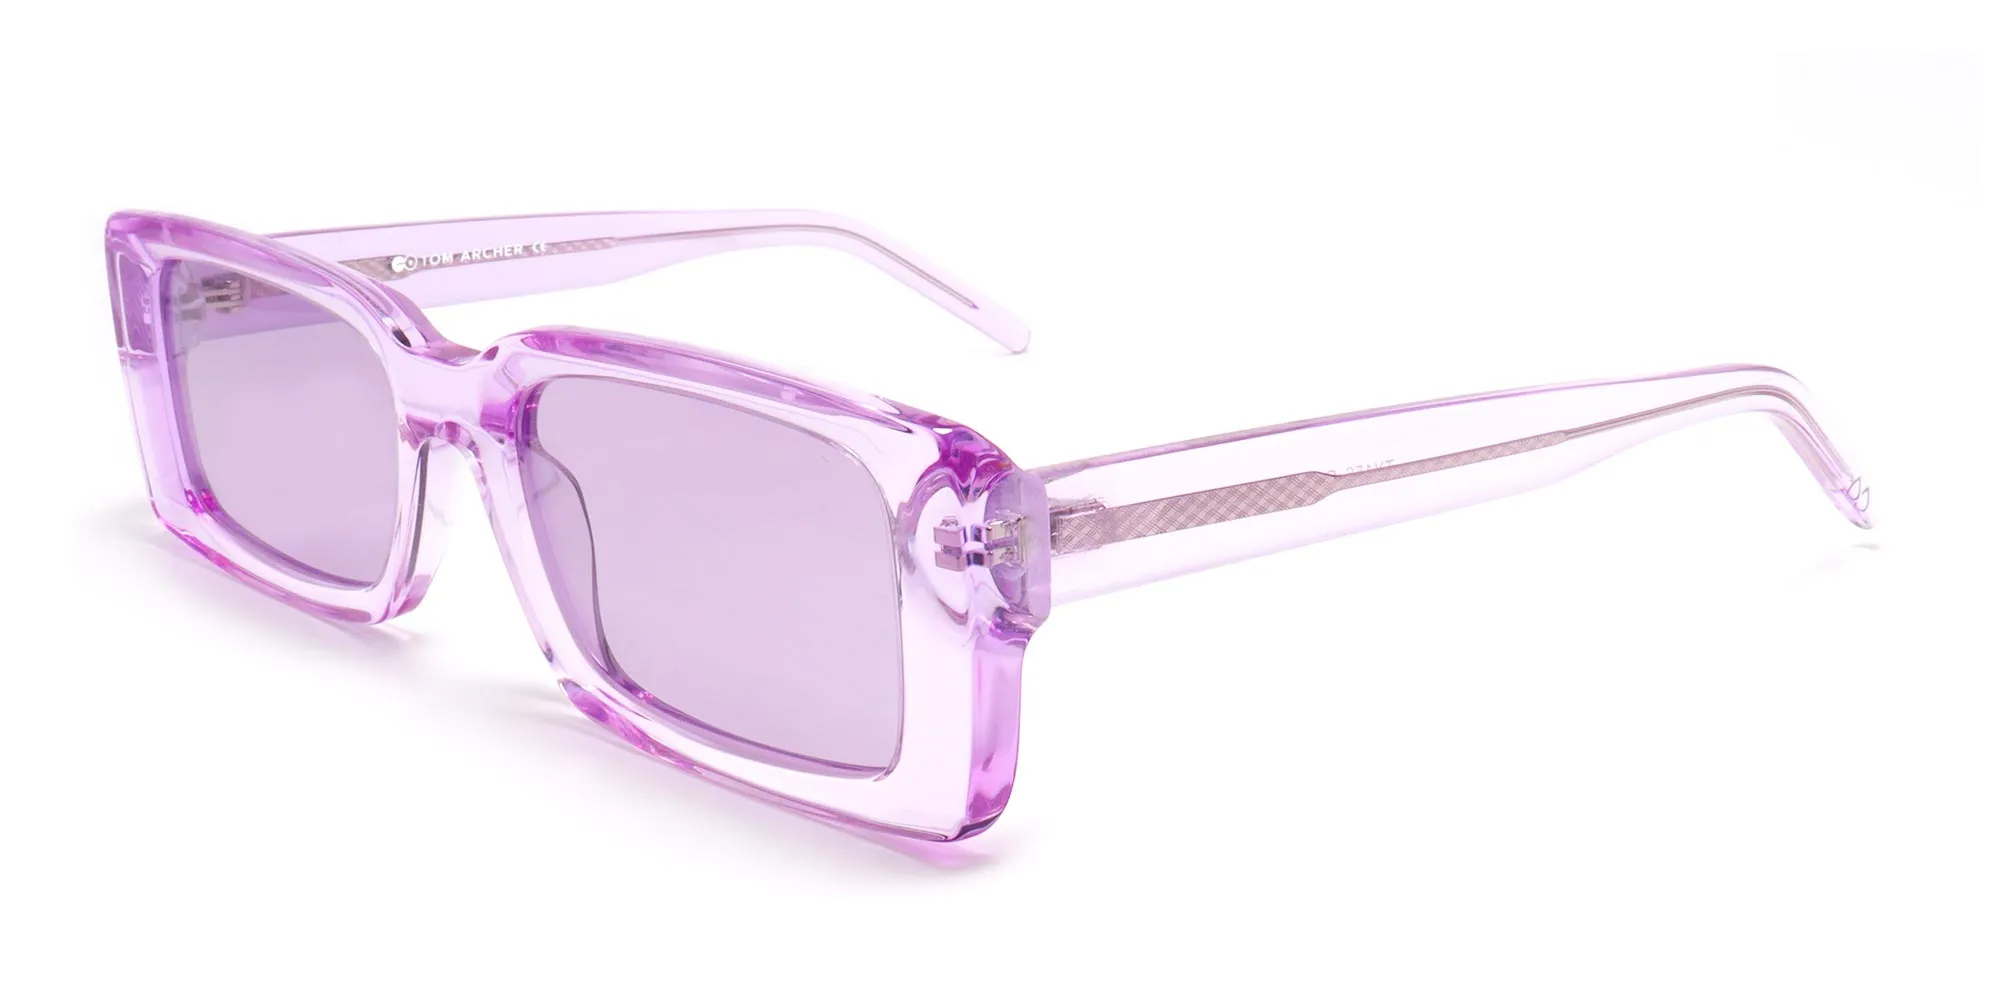 purple rectangle sunglasses